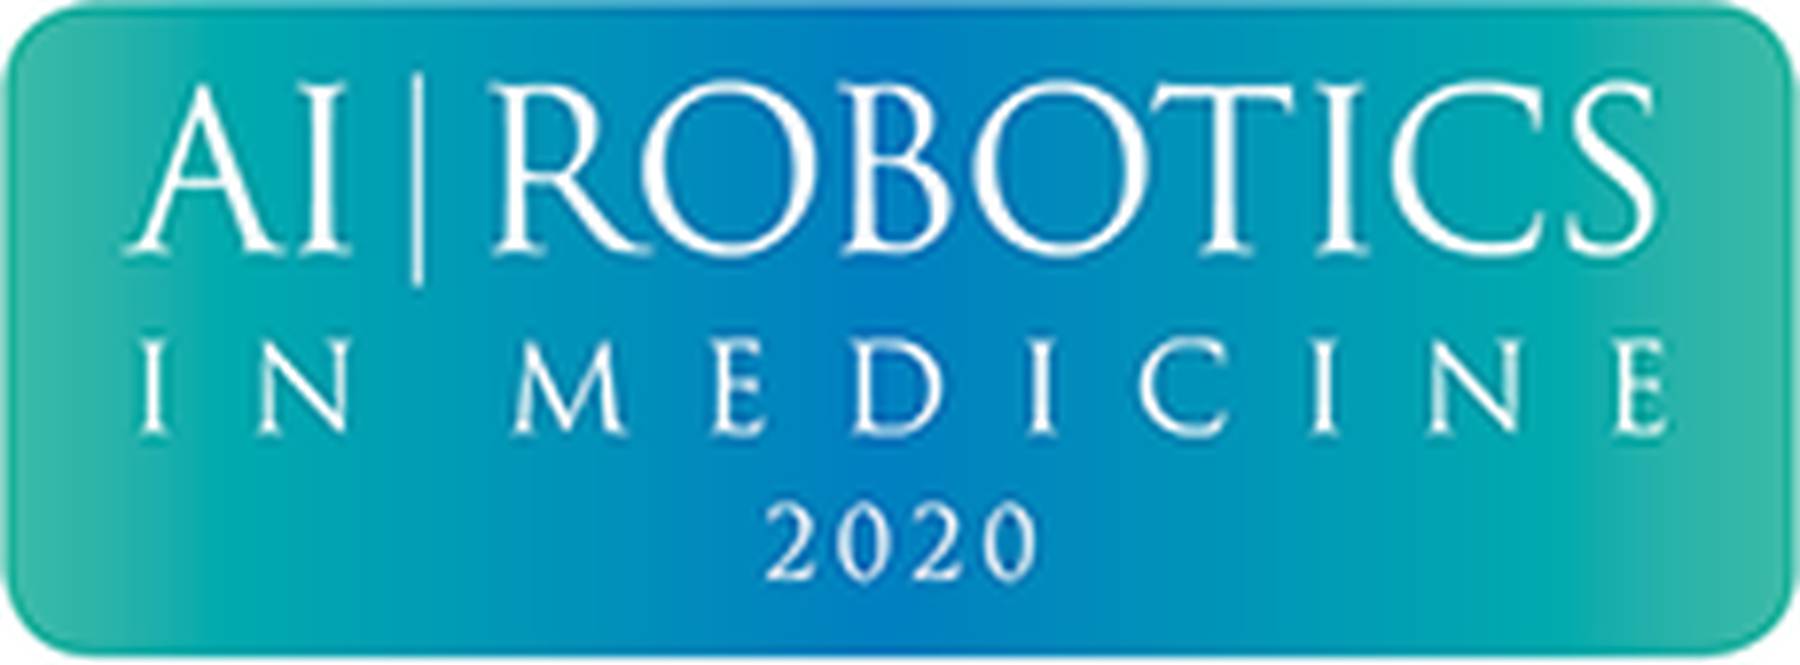 Medical AI and Robotics Conference London 2020